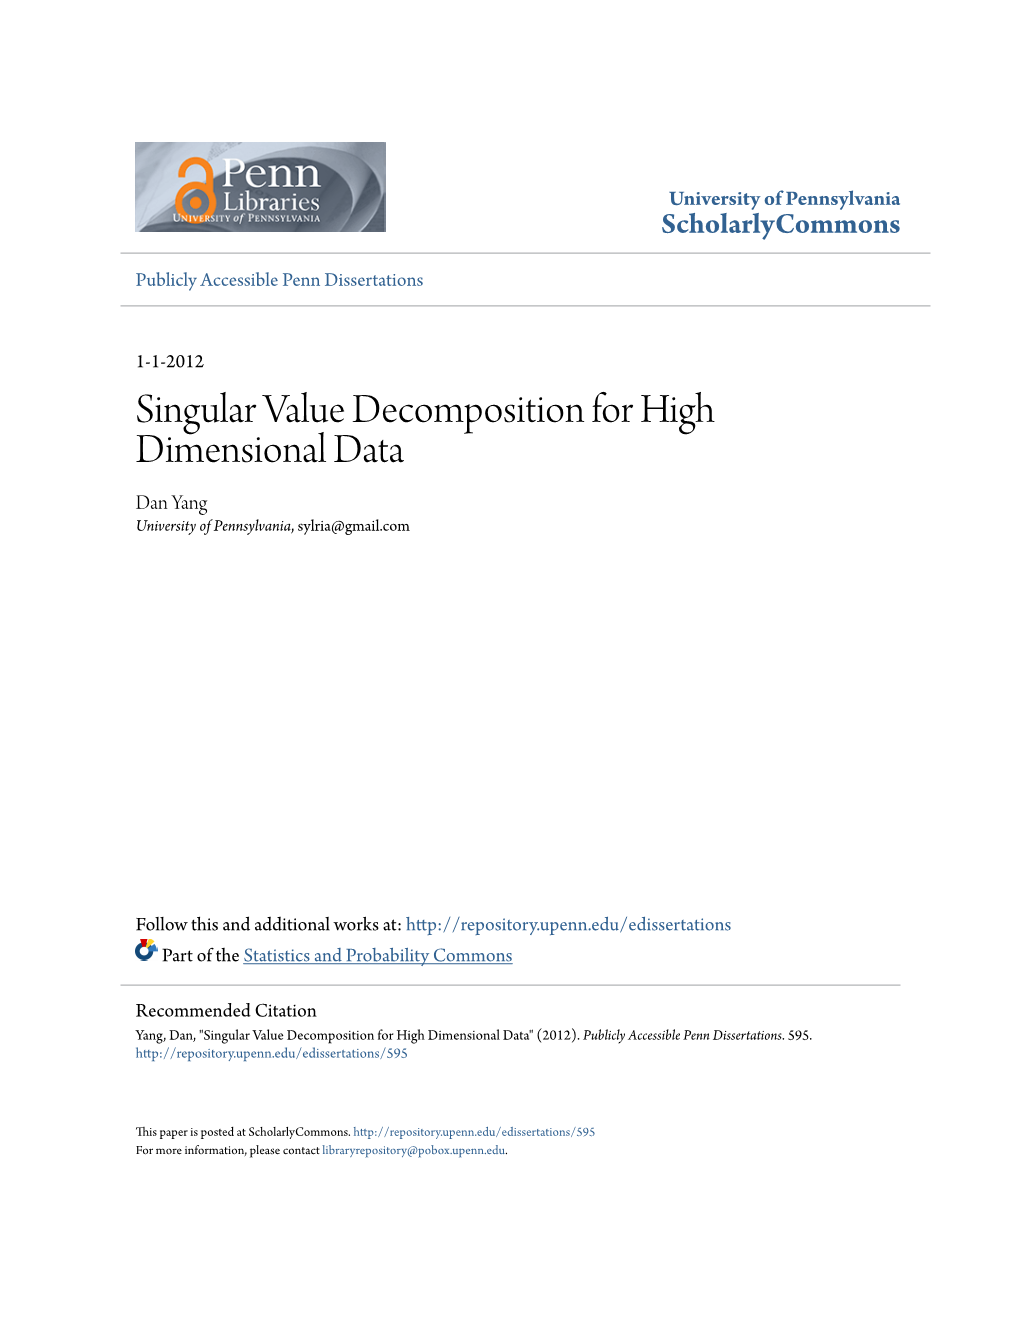 Singular Value Decomposition for High Dimensional Data Dan Yang University of Pennsylvania, Sylria@Gmail.Com